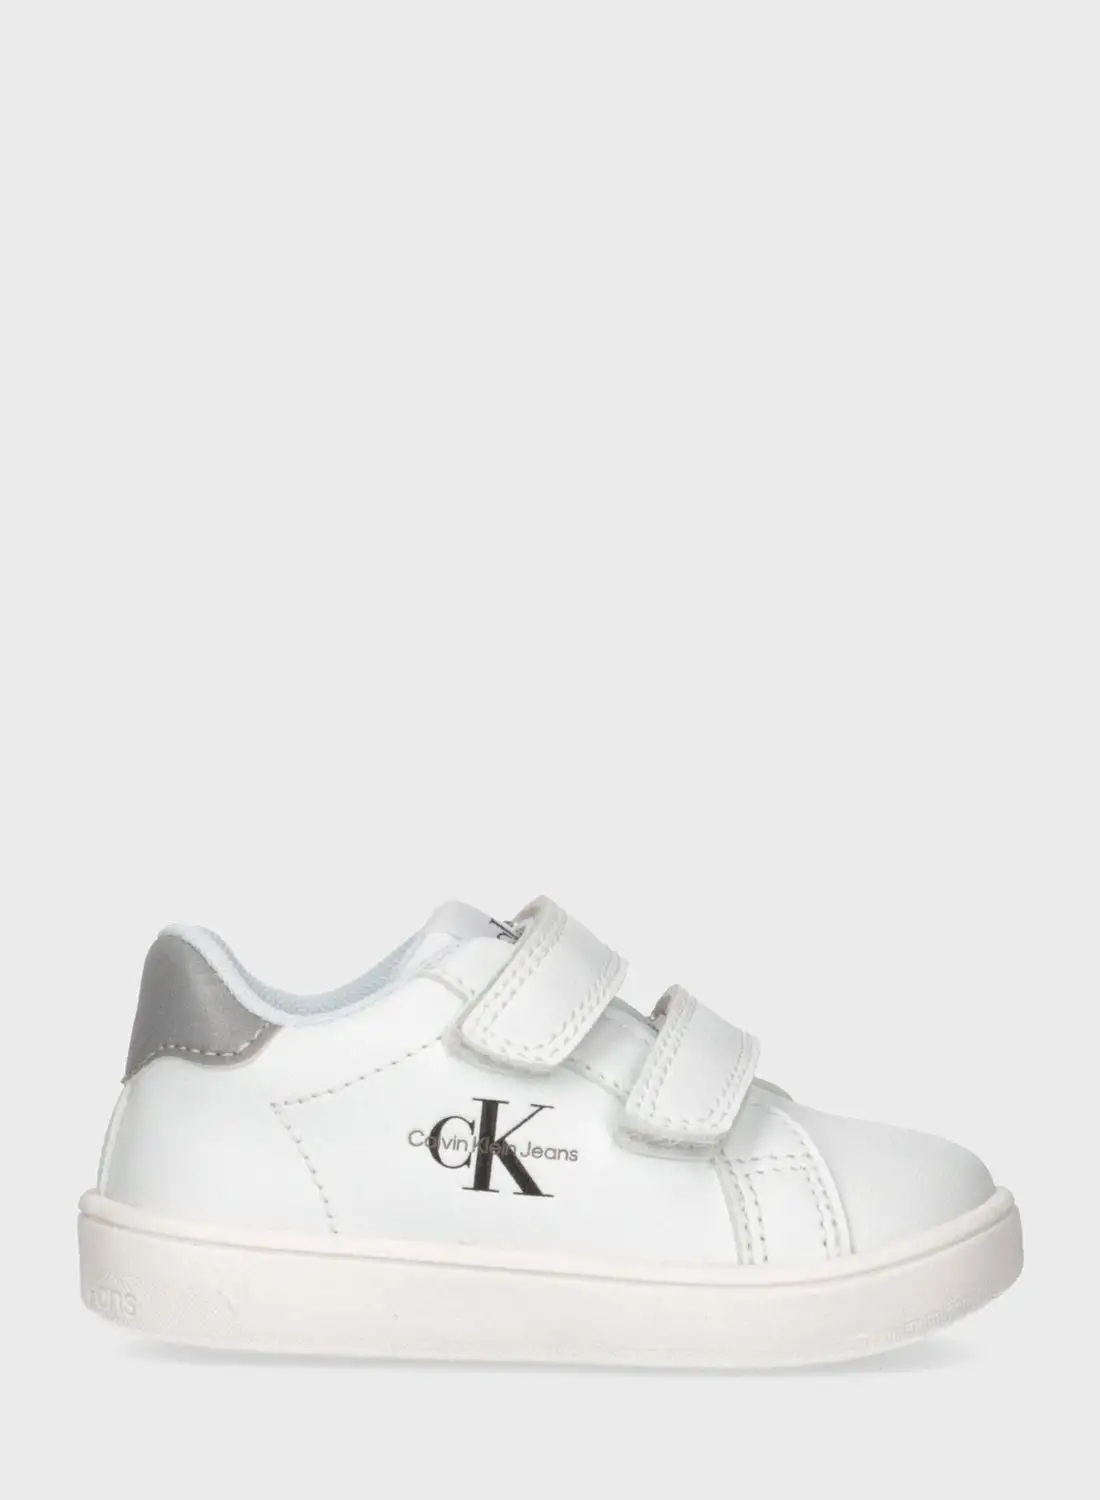 Calvin Klein Jeans Kids Velcro Sneakers